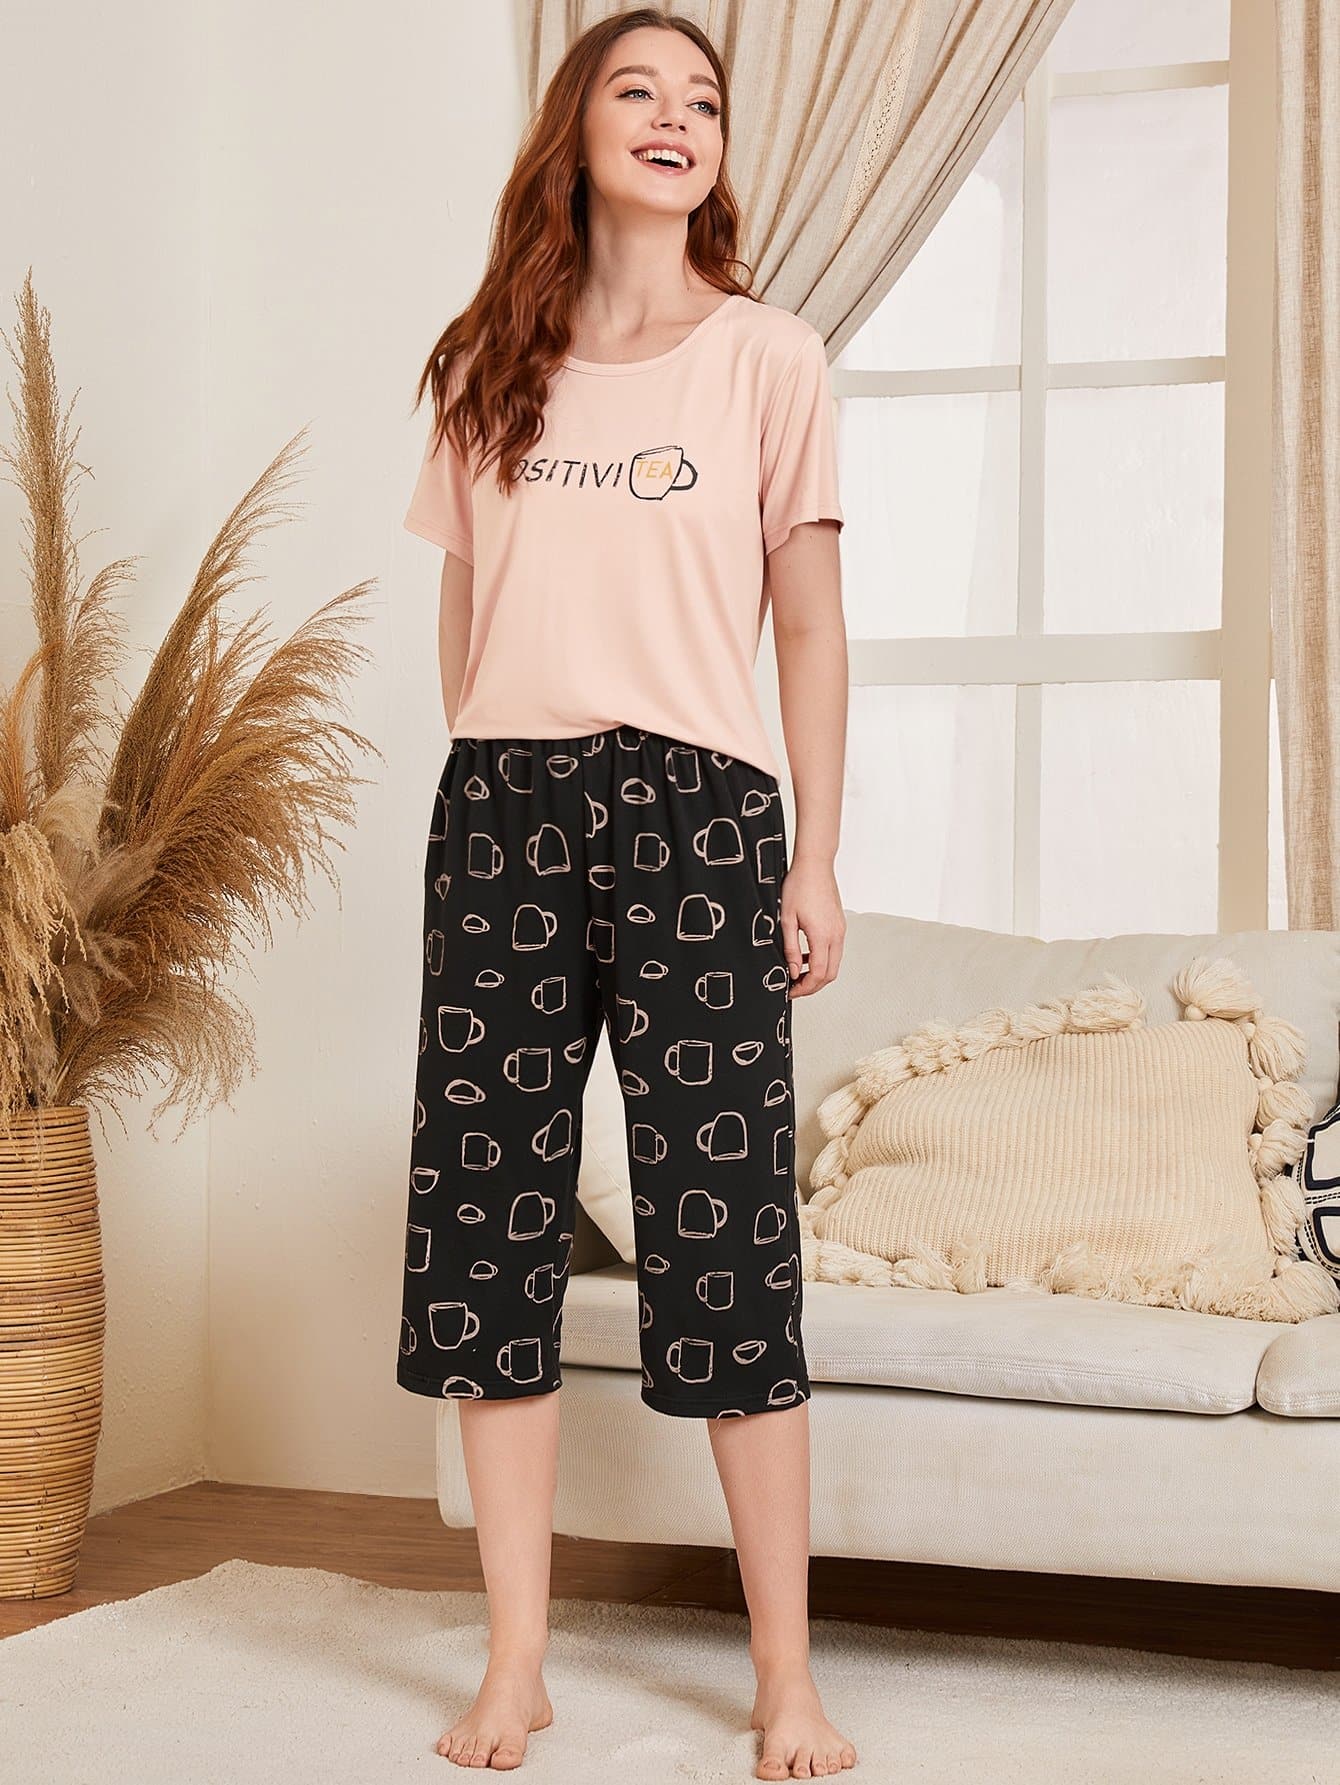 Round Neck Short Sleeve Letter and Cups Print Pyjama Sleepwear Set